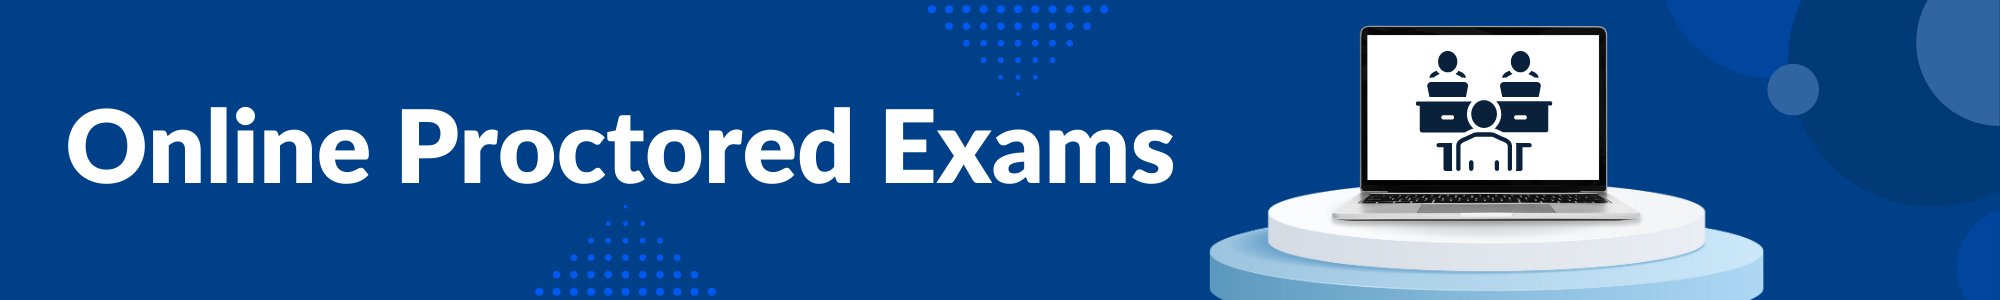 Online Proctored Exams Banner